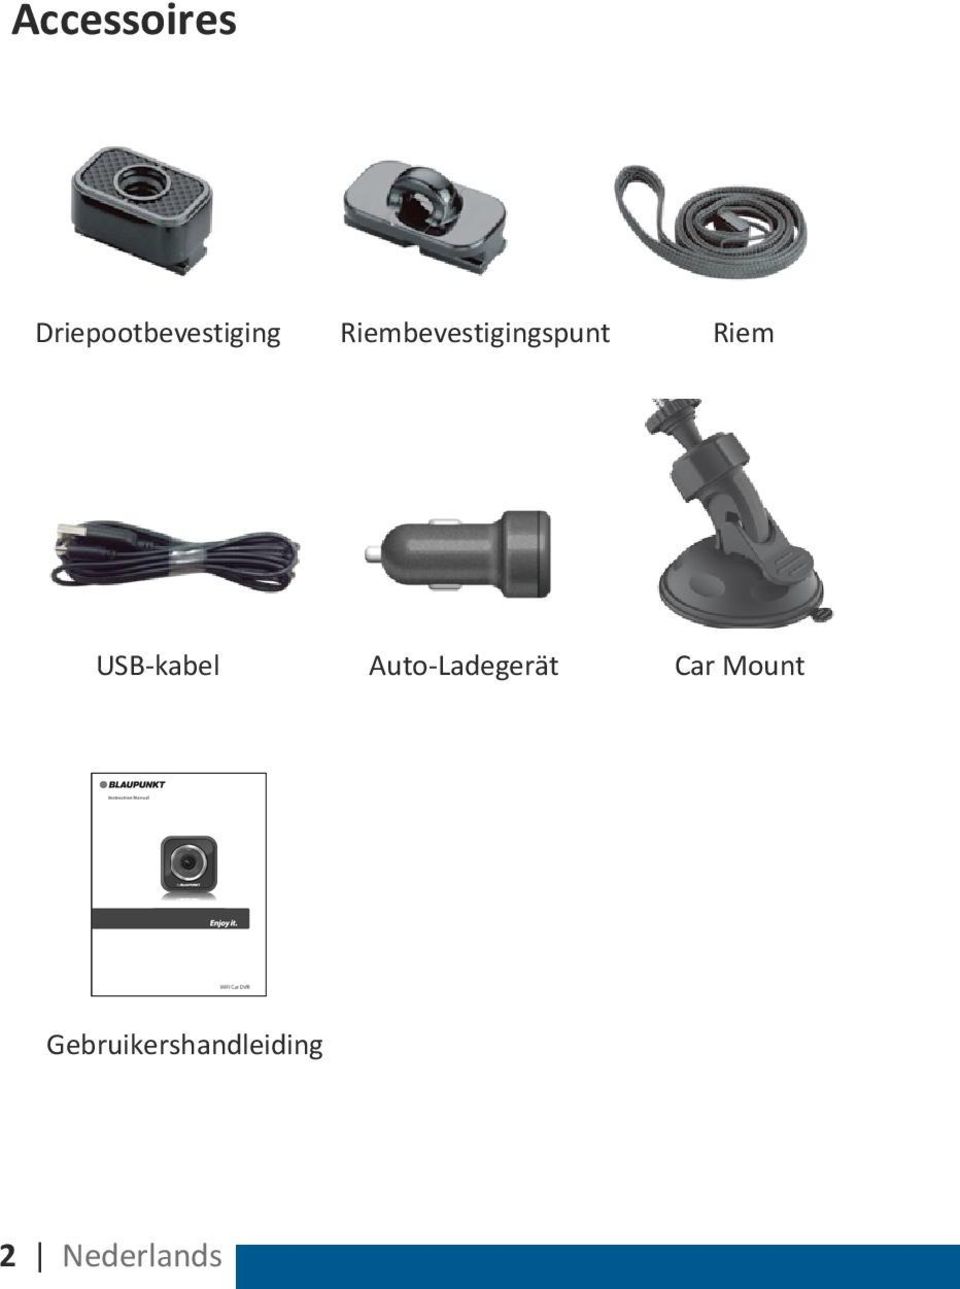 USB-kabel Auto-Ladegerät Car